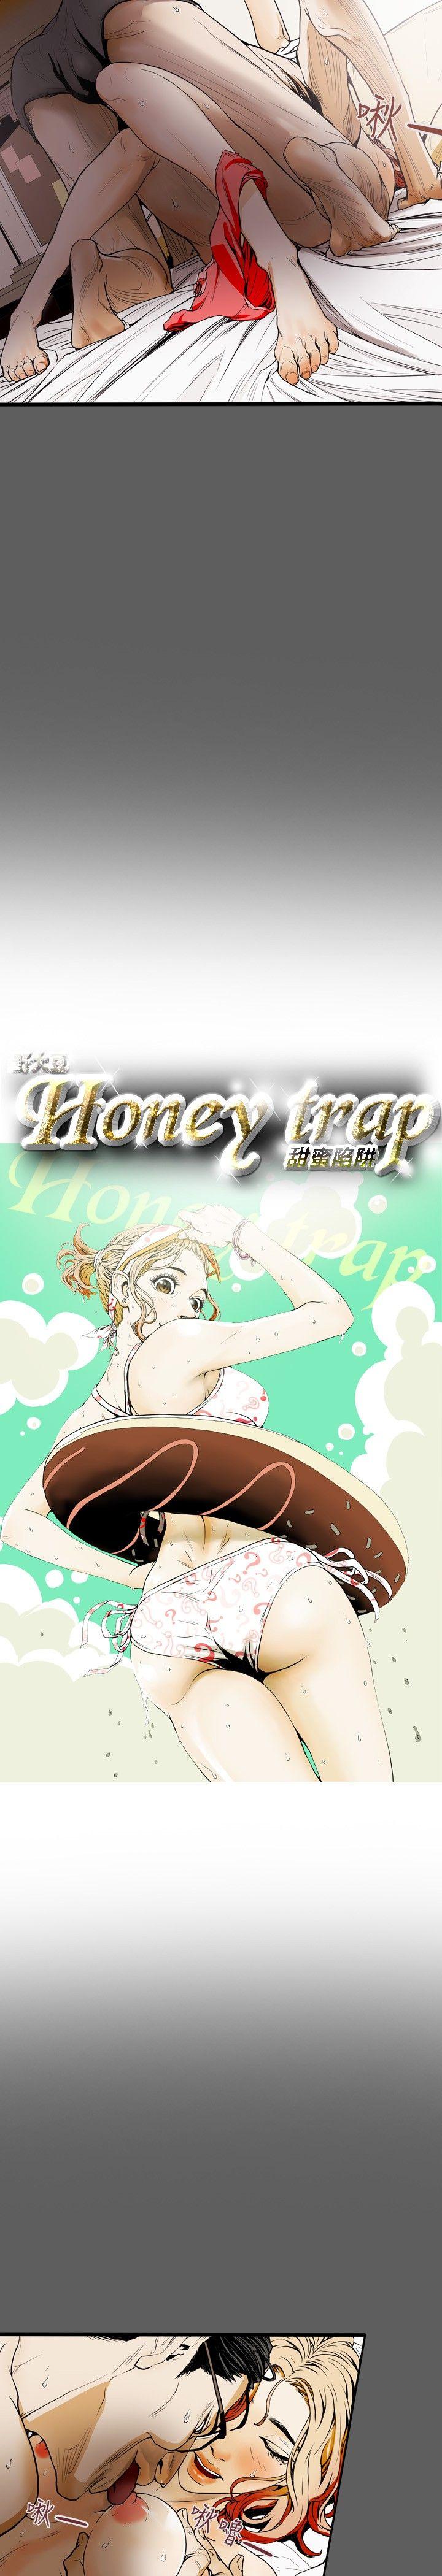 Honey trap 甜蜜陷阱  第18话 漫画图片2.jpg